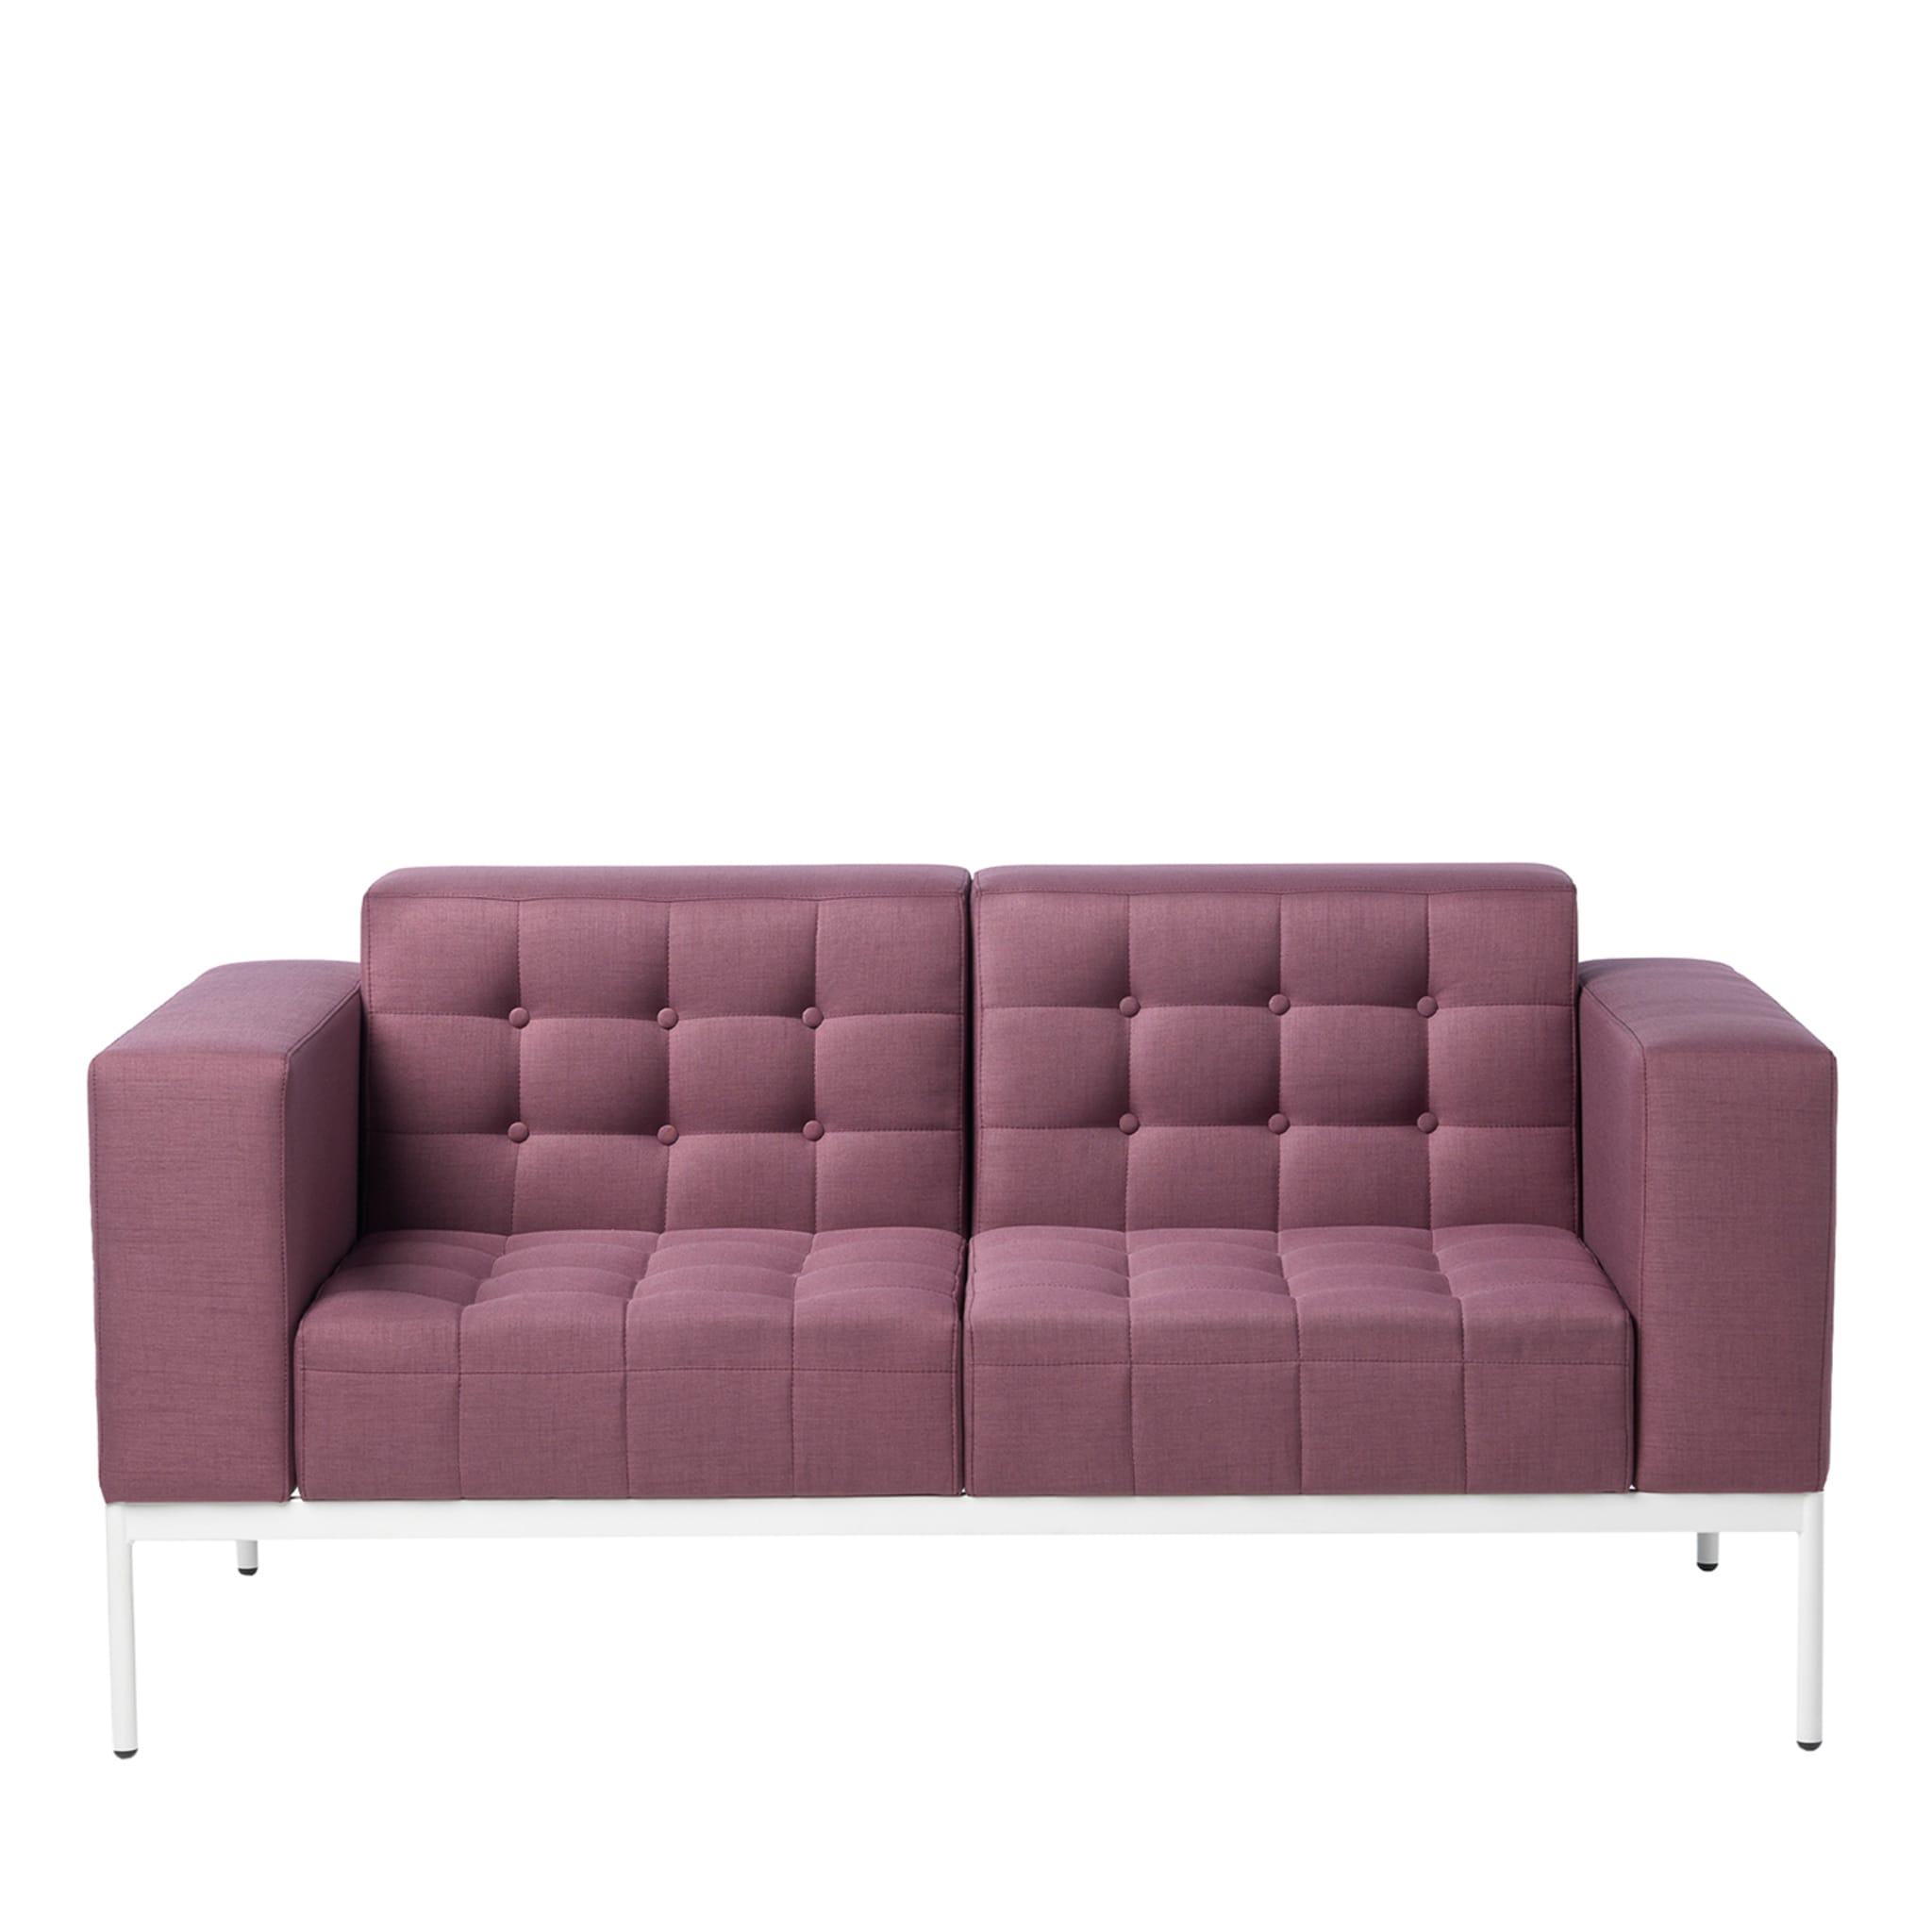 Classmade 2 seater Purple Sofa - Main view